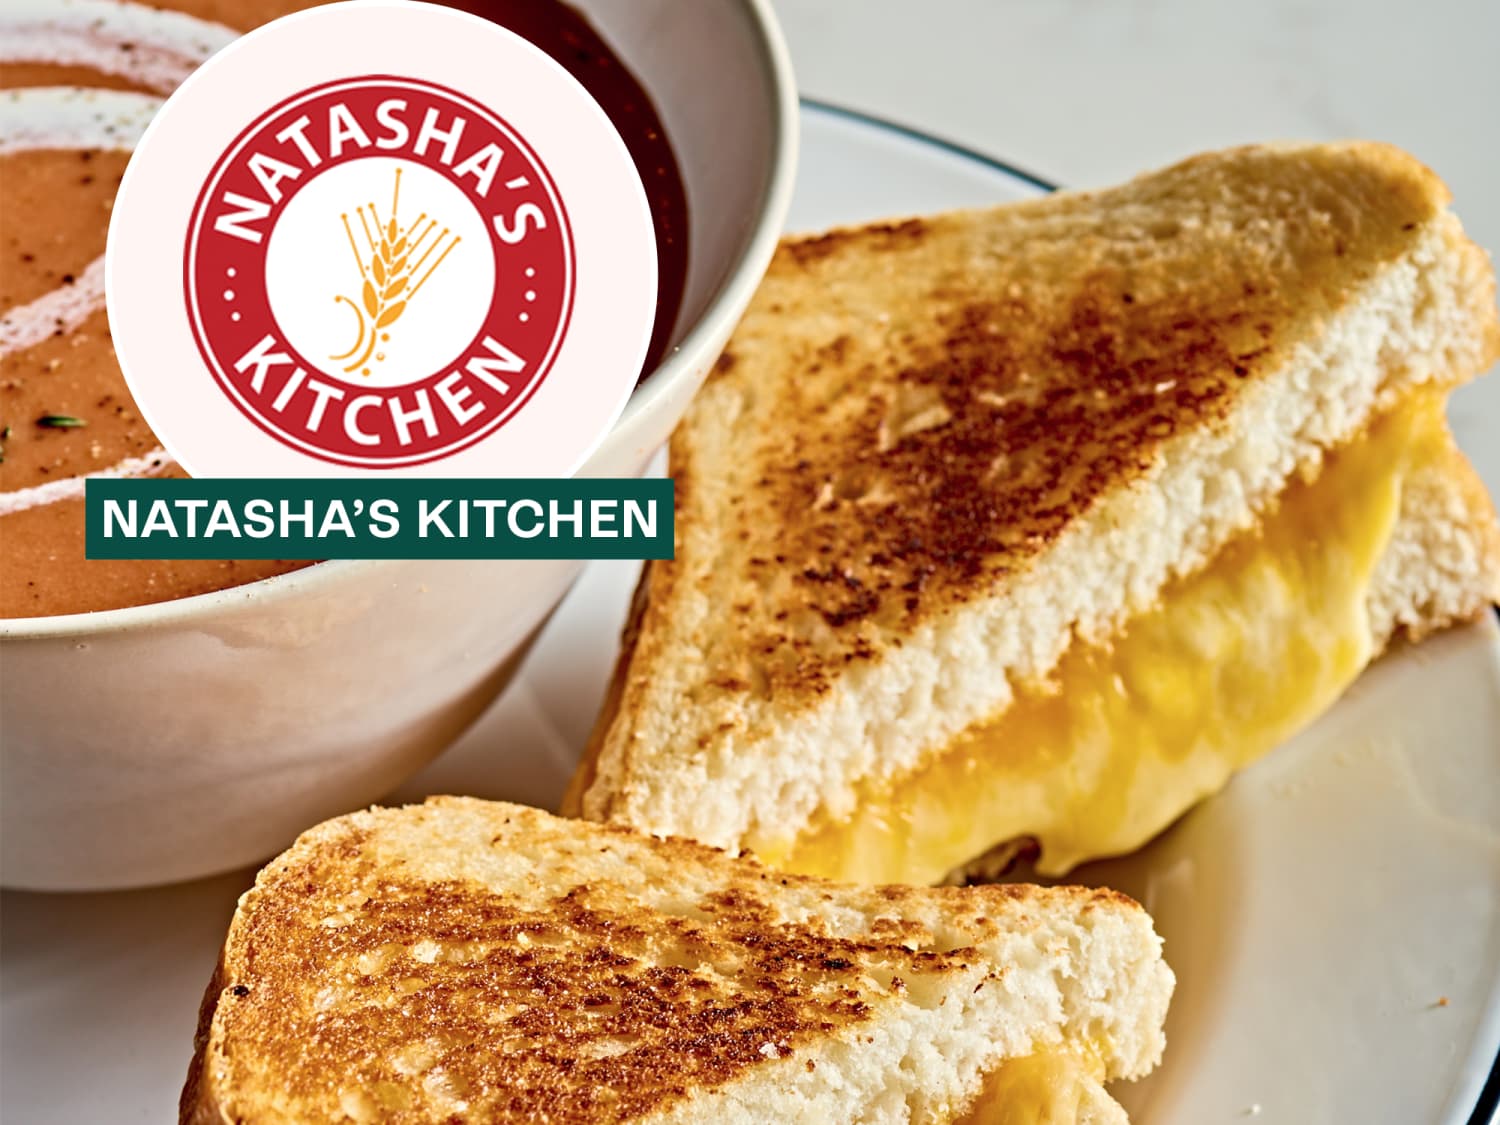 The Sasha: Standard Grilled Cheese